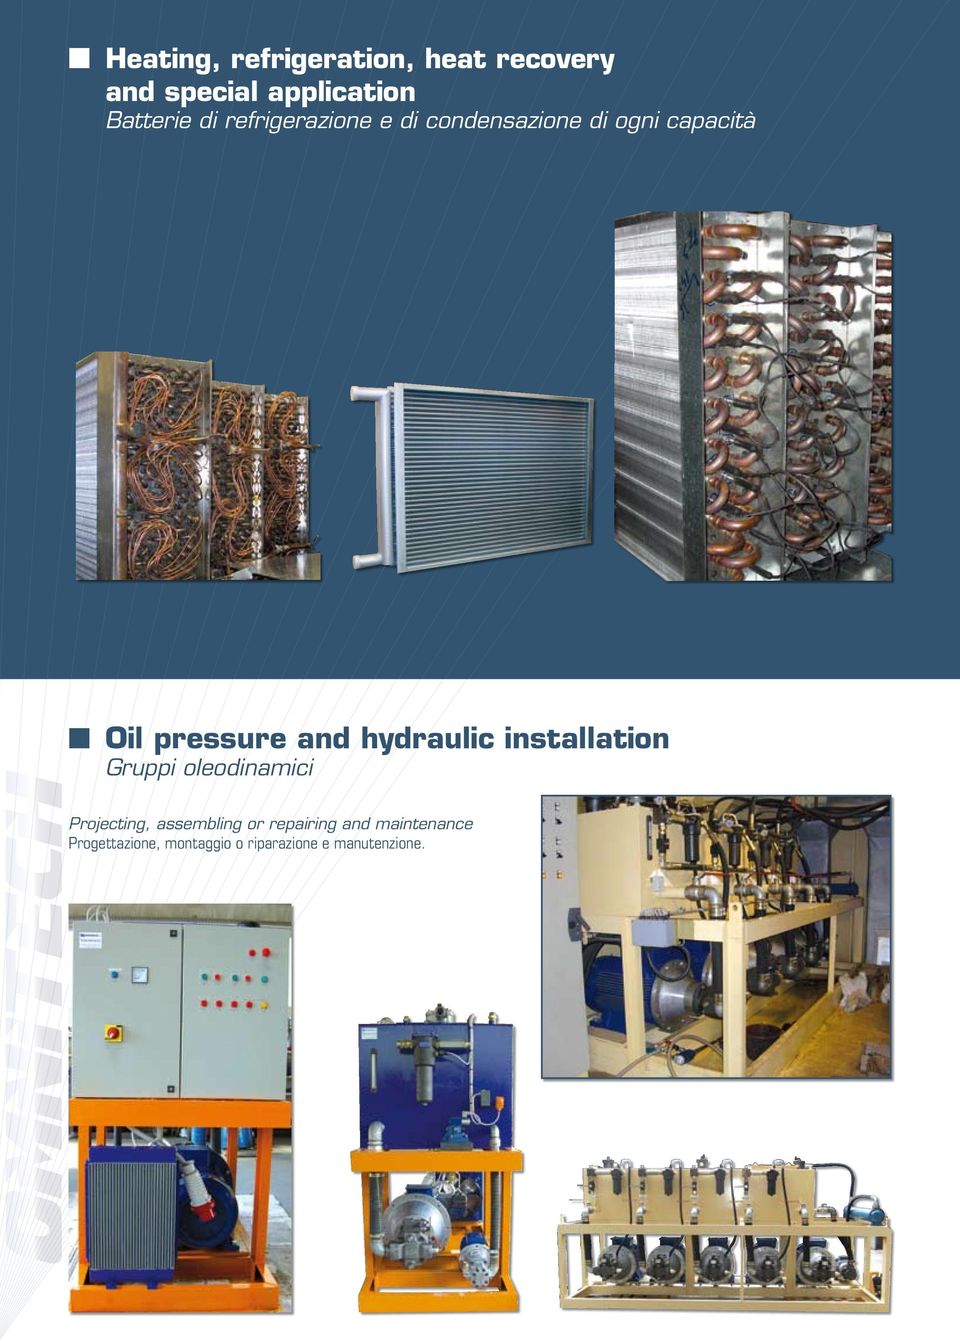 hydraulic installation Gruppi oleodinamici Projecting, assembling or